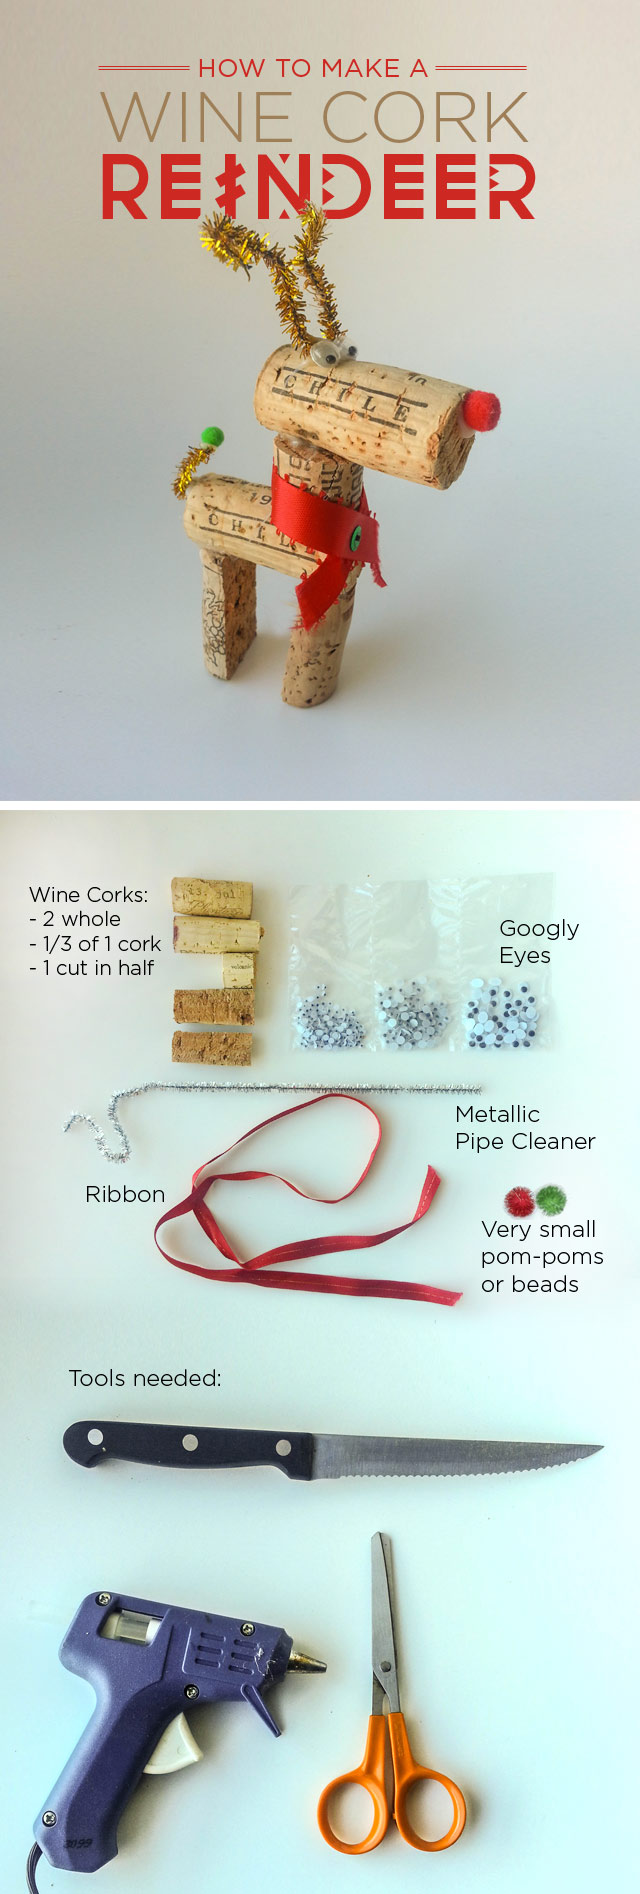 DIY wine cork reindeer decoration (via visualheart.com)